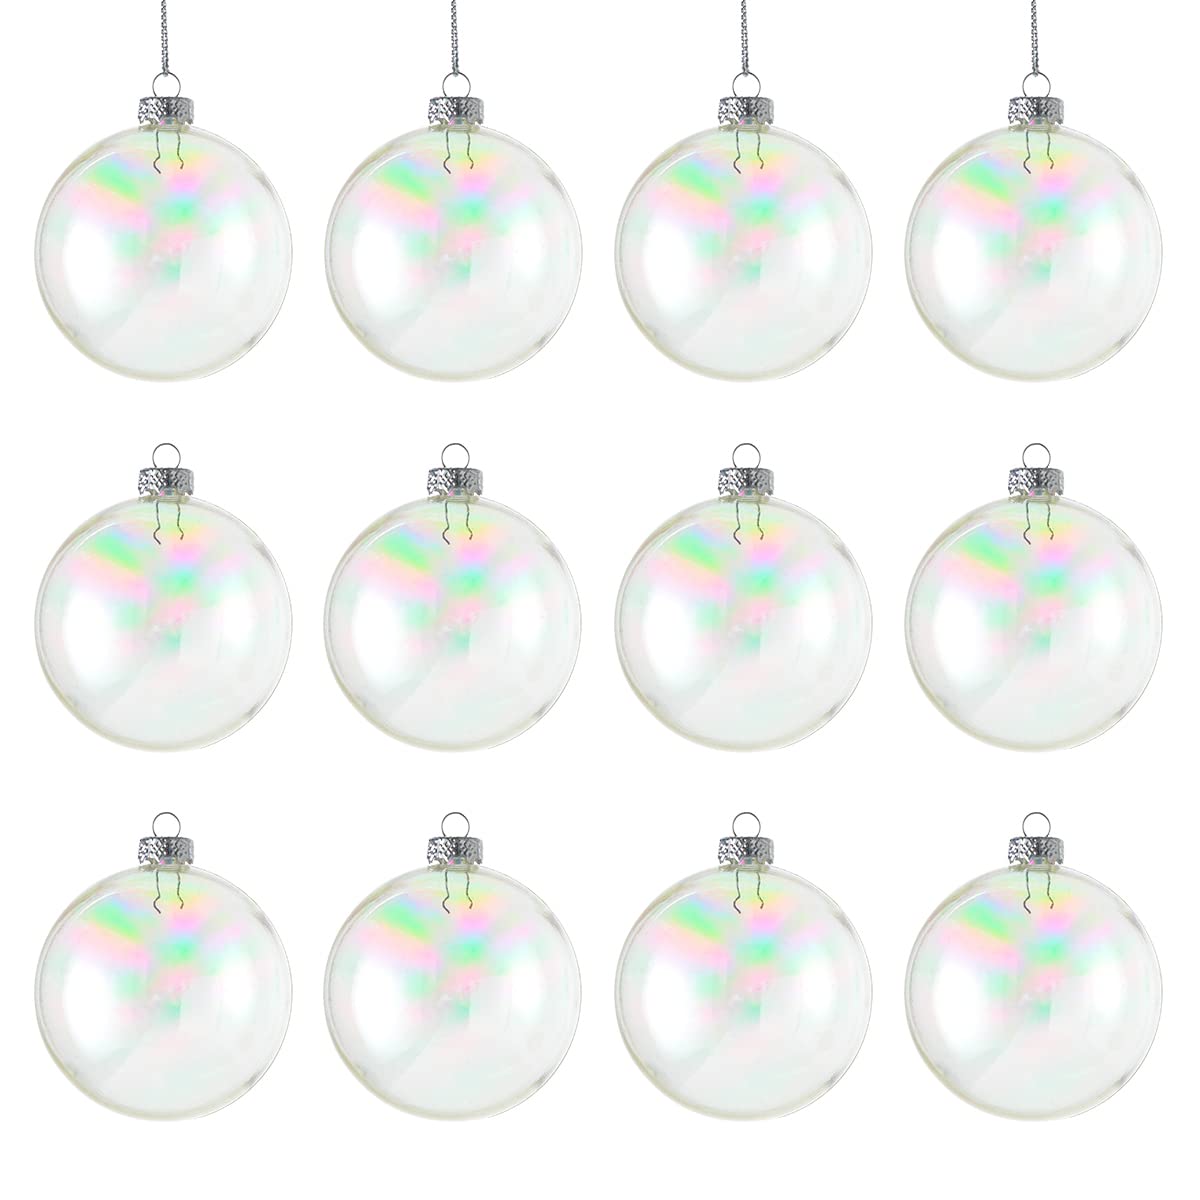 12 Pcs 6in Chrome Christmas Ball Ornaments